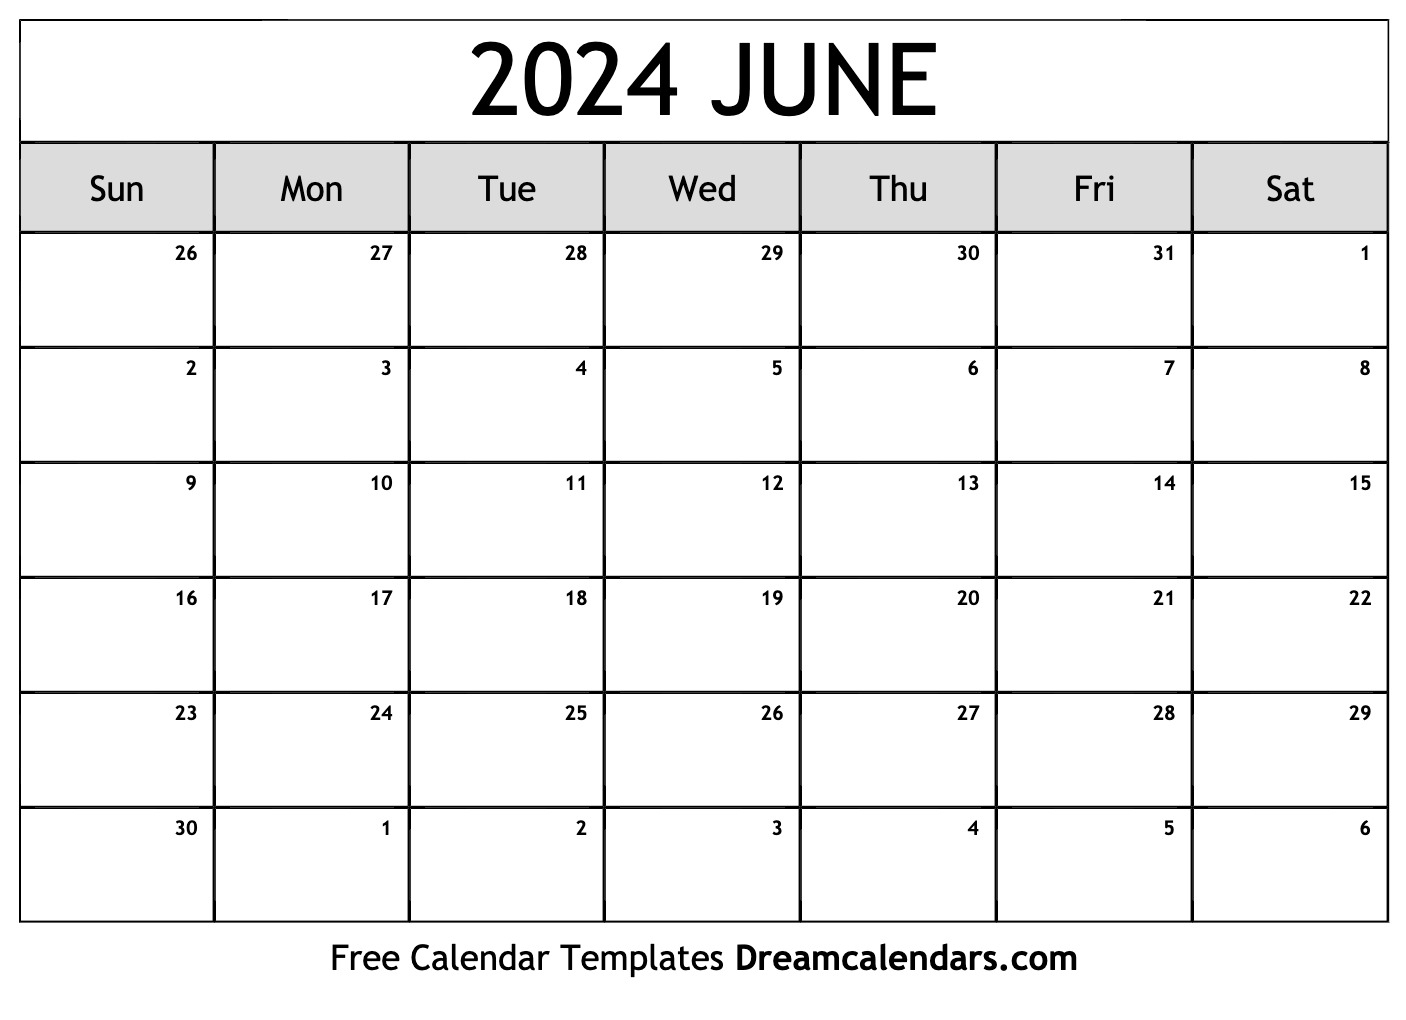 June 2024 Calendar | Free Blank Printable With Holidays for A-Printable-Calendar June 2024